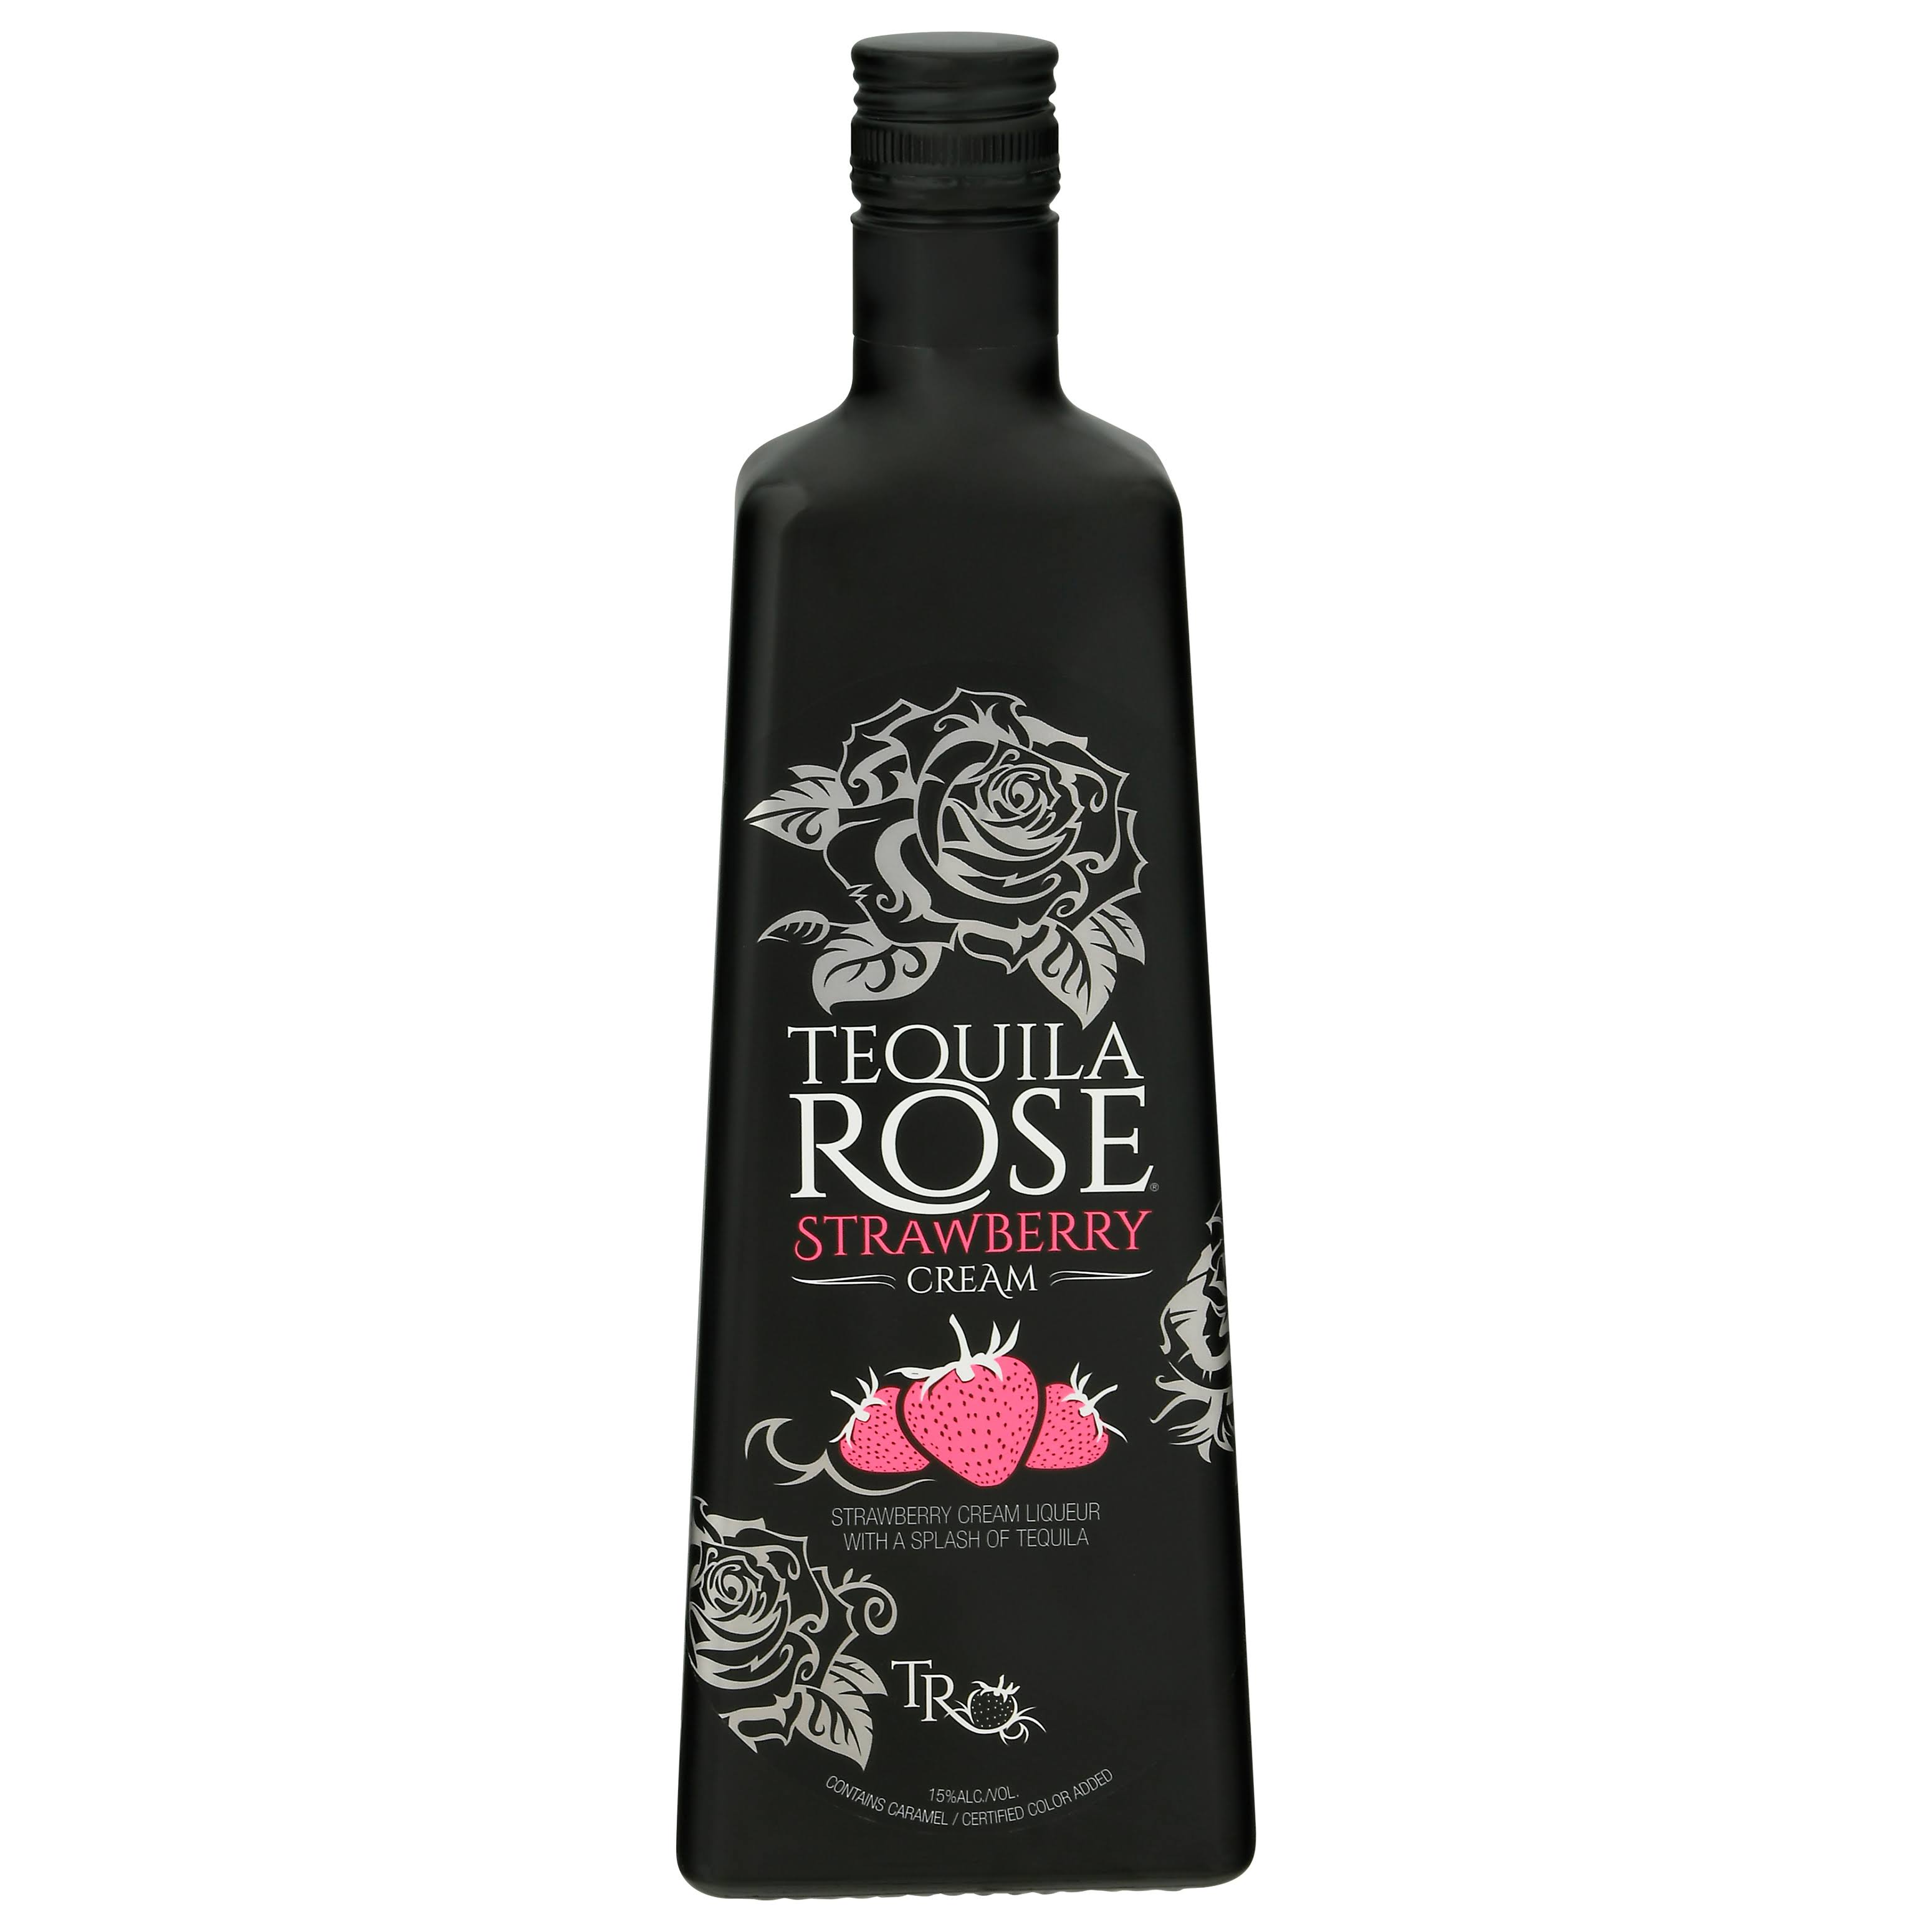 Tequila Rose Liqueur Gift Set - Strawberry Cream, 750ml